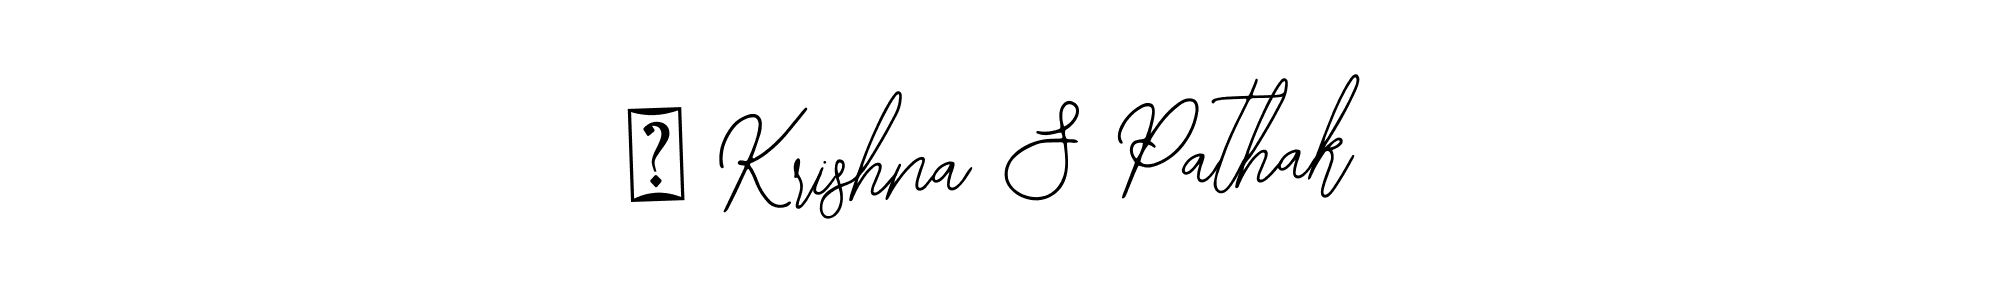 How to Draw ॐ Krishna S Pathak signature style? Bearetta-2O07w is a latest design signature styles for name ॐ Krishna S Pathak. ॐ Krishna S Pathak signature style 12 images and pictures png